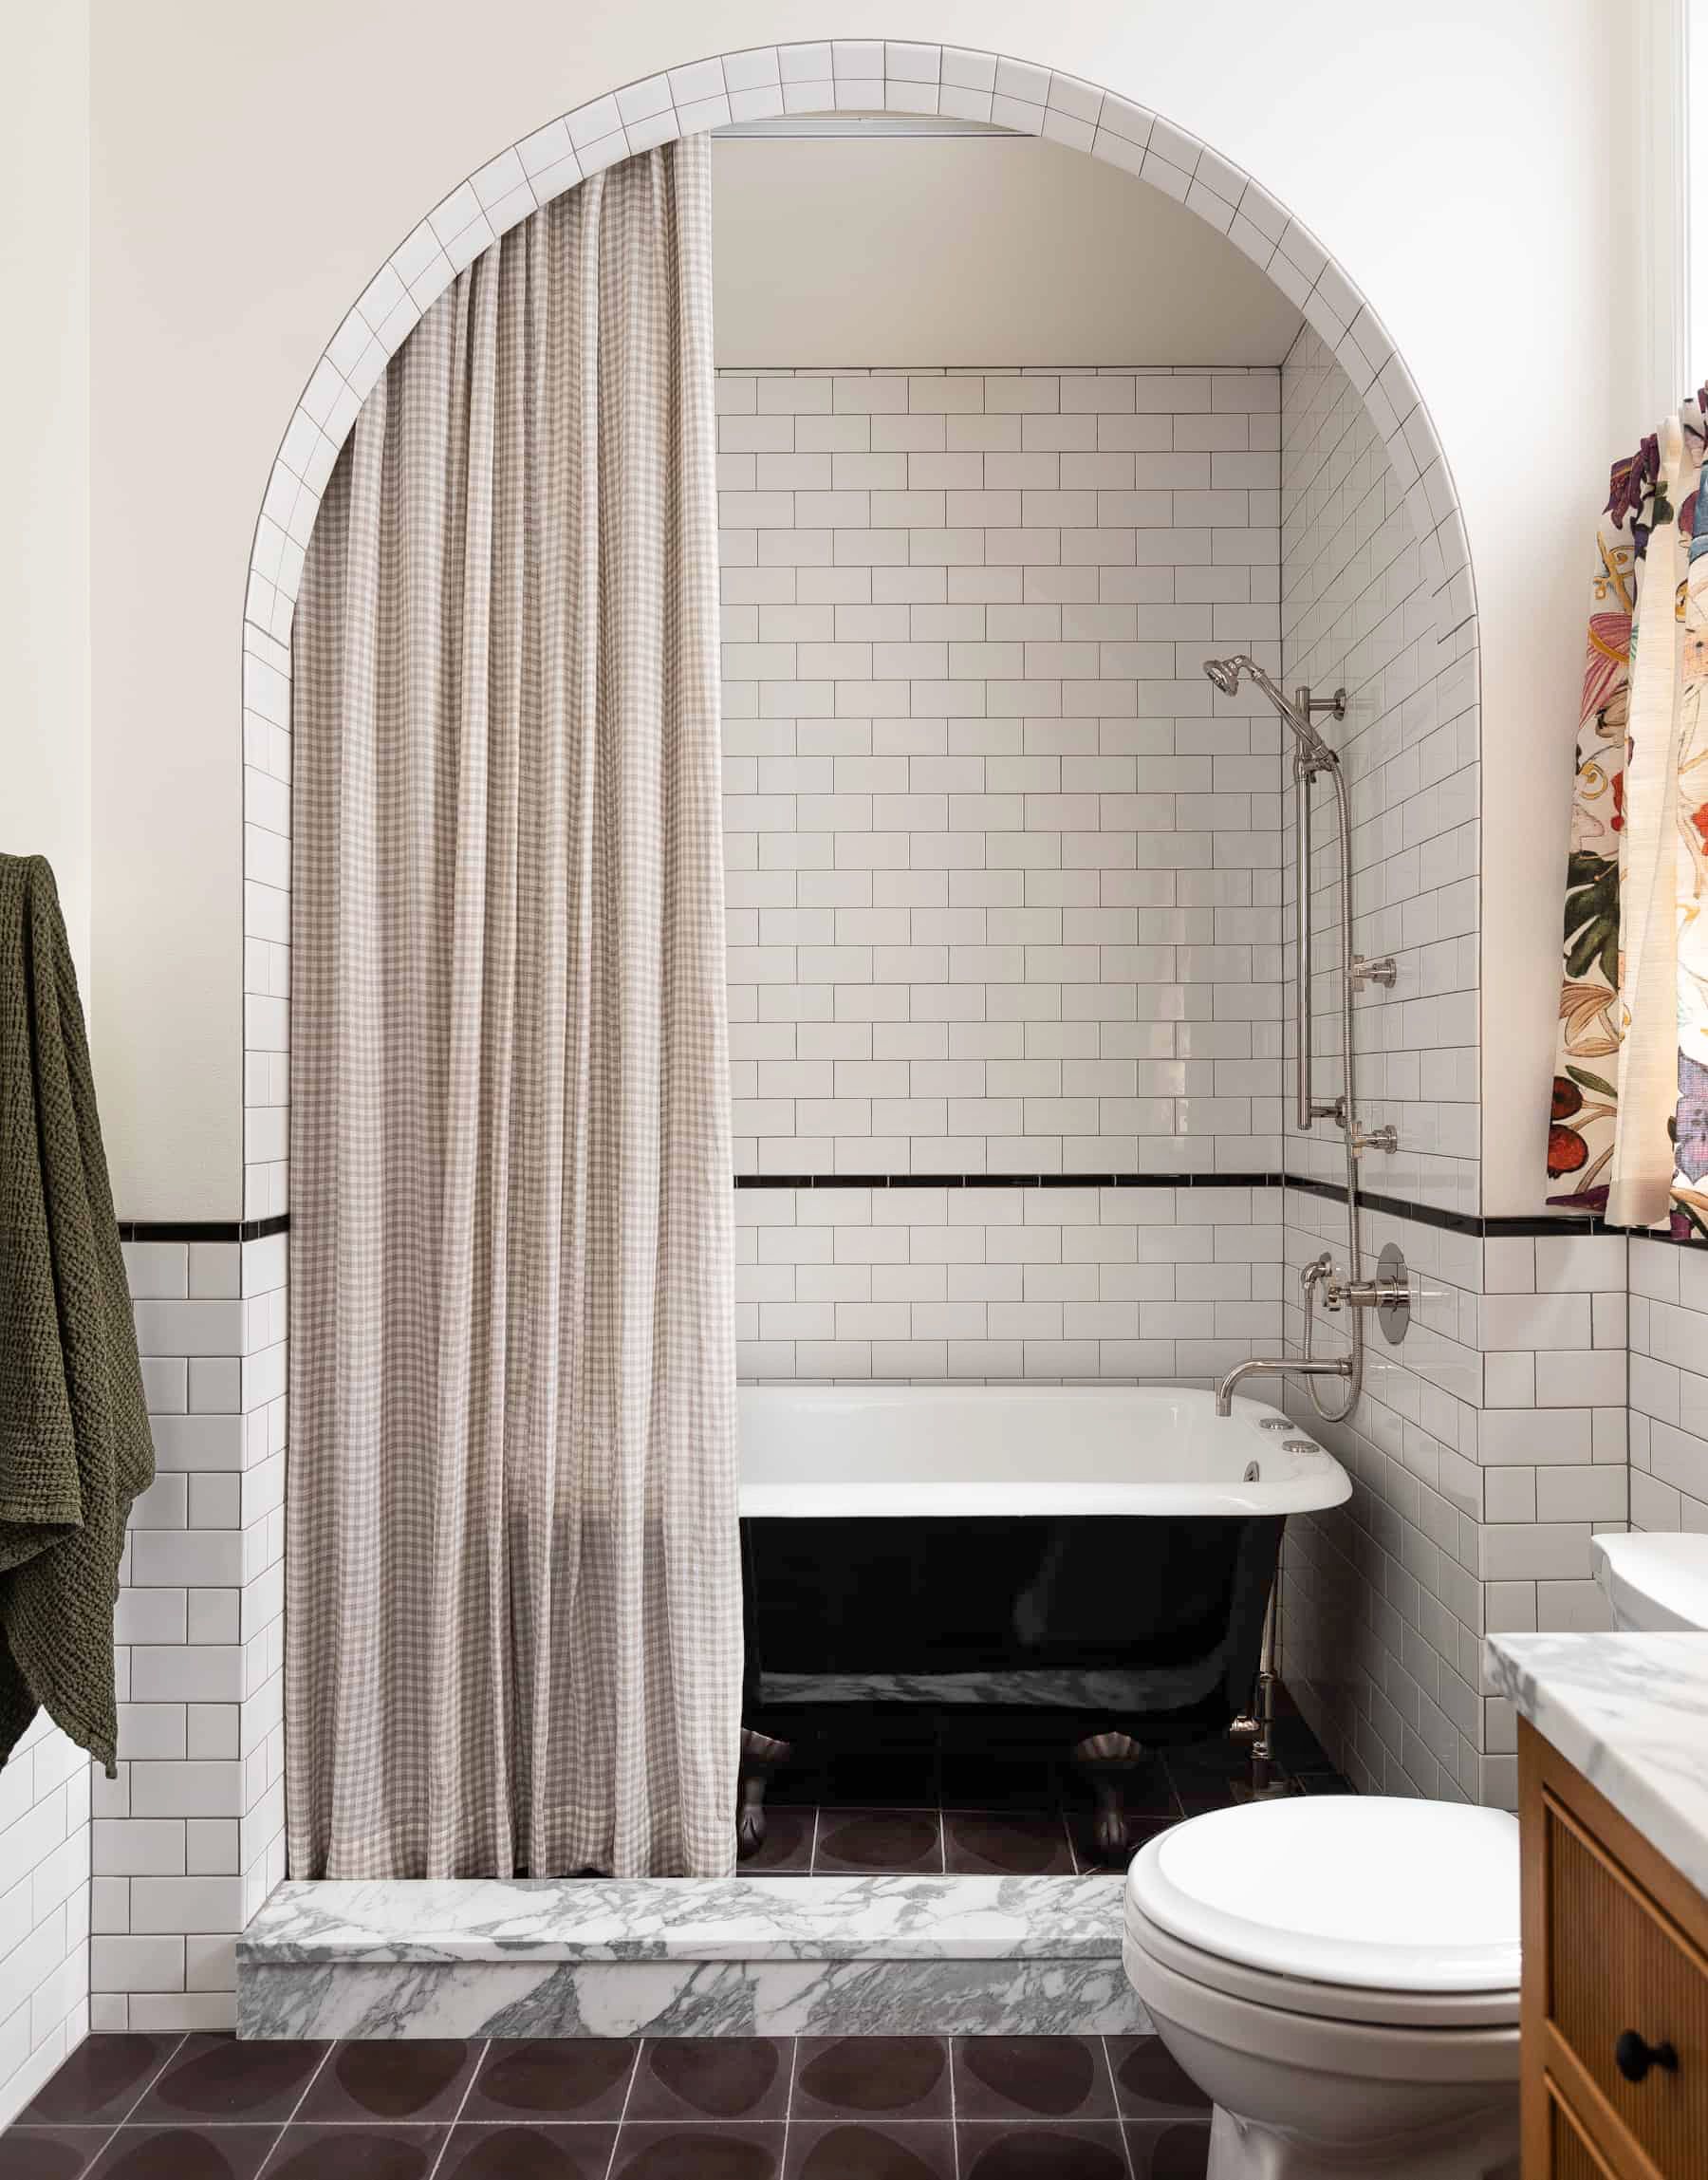 60 Bathroom Tile Ideas - Bath Tile Backsplash And Floor Designs